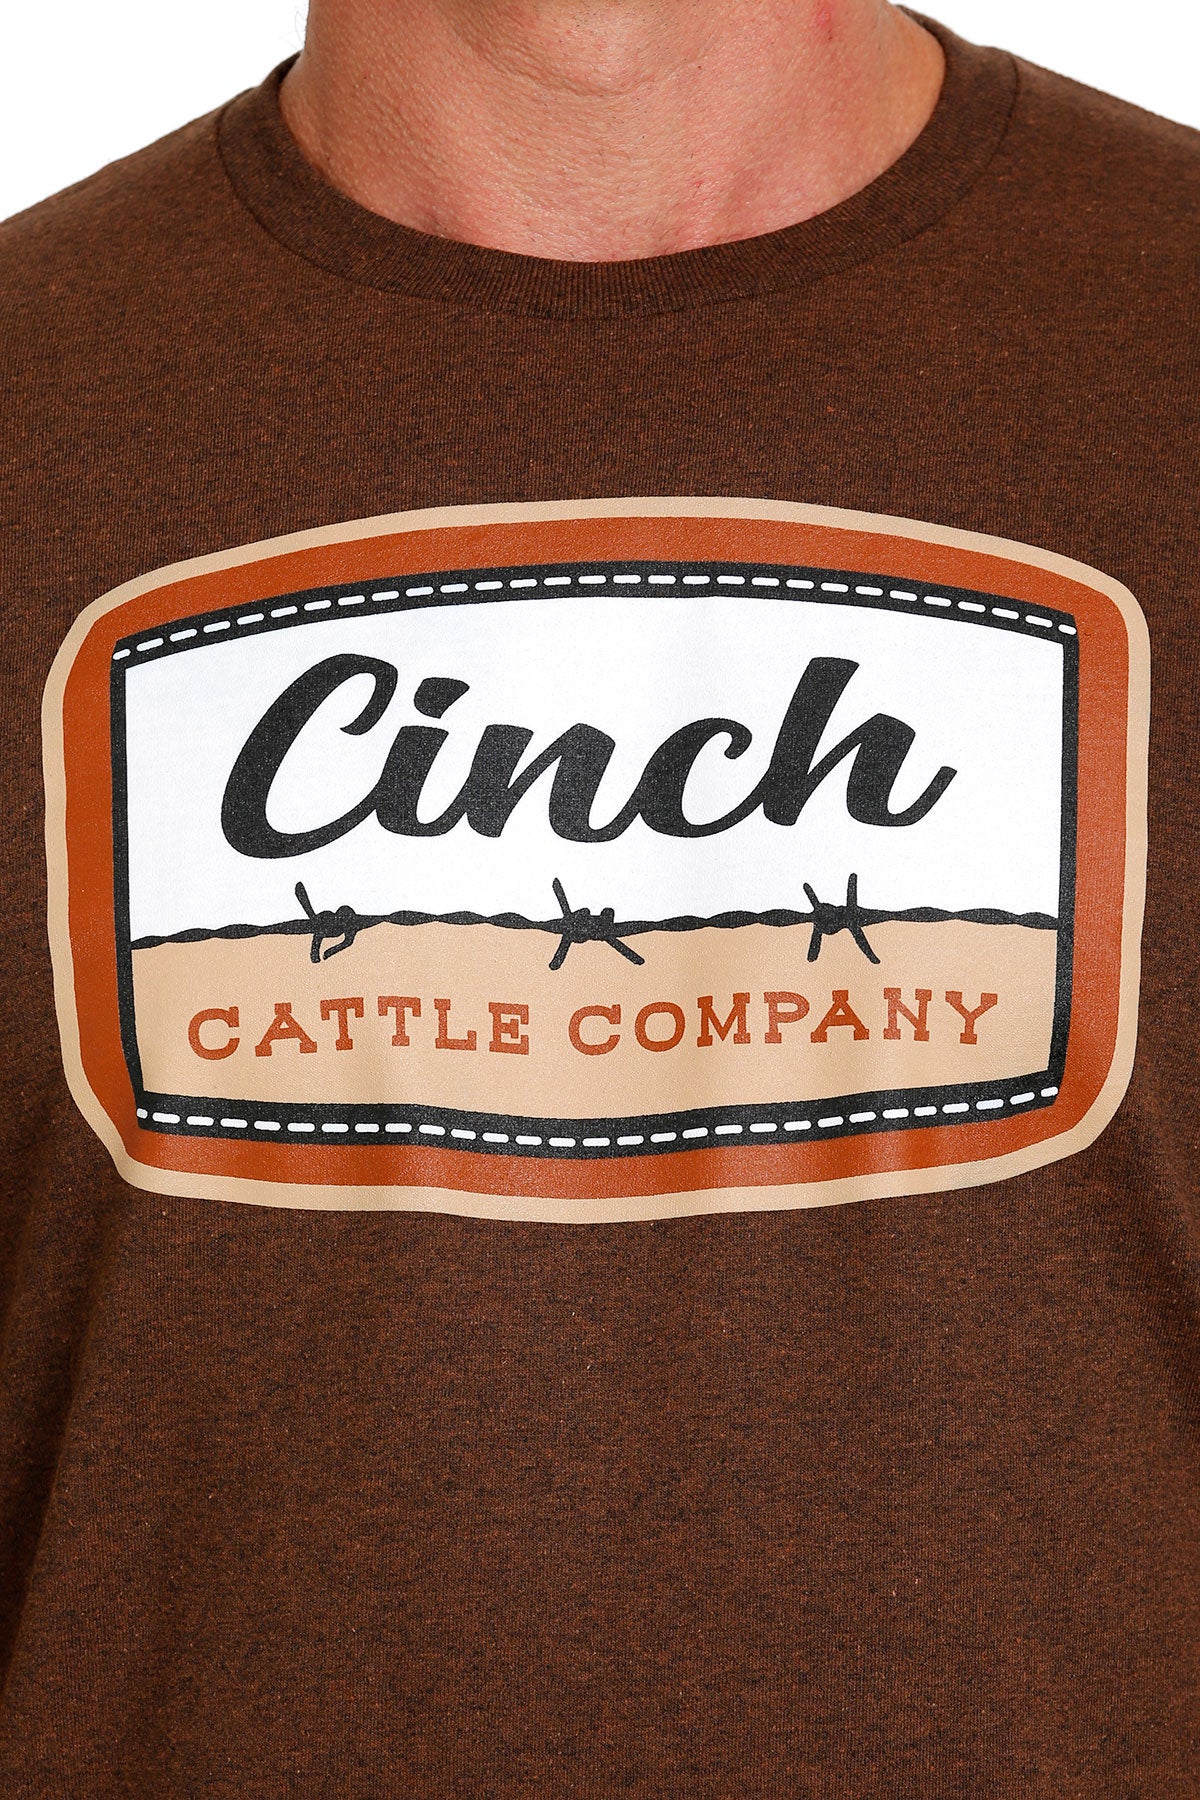 Cinch Men's Brown Cattle Company T-Shirt